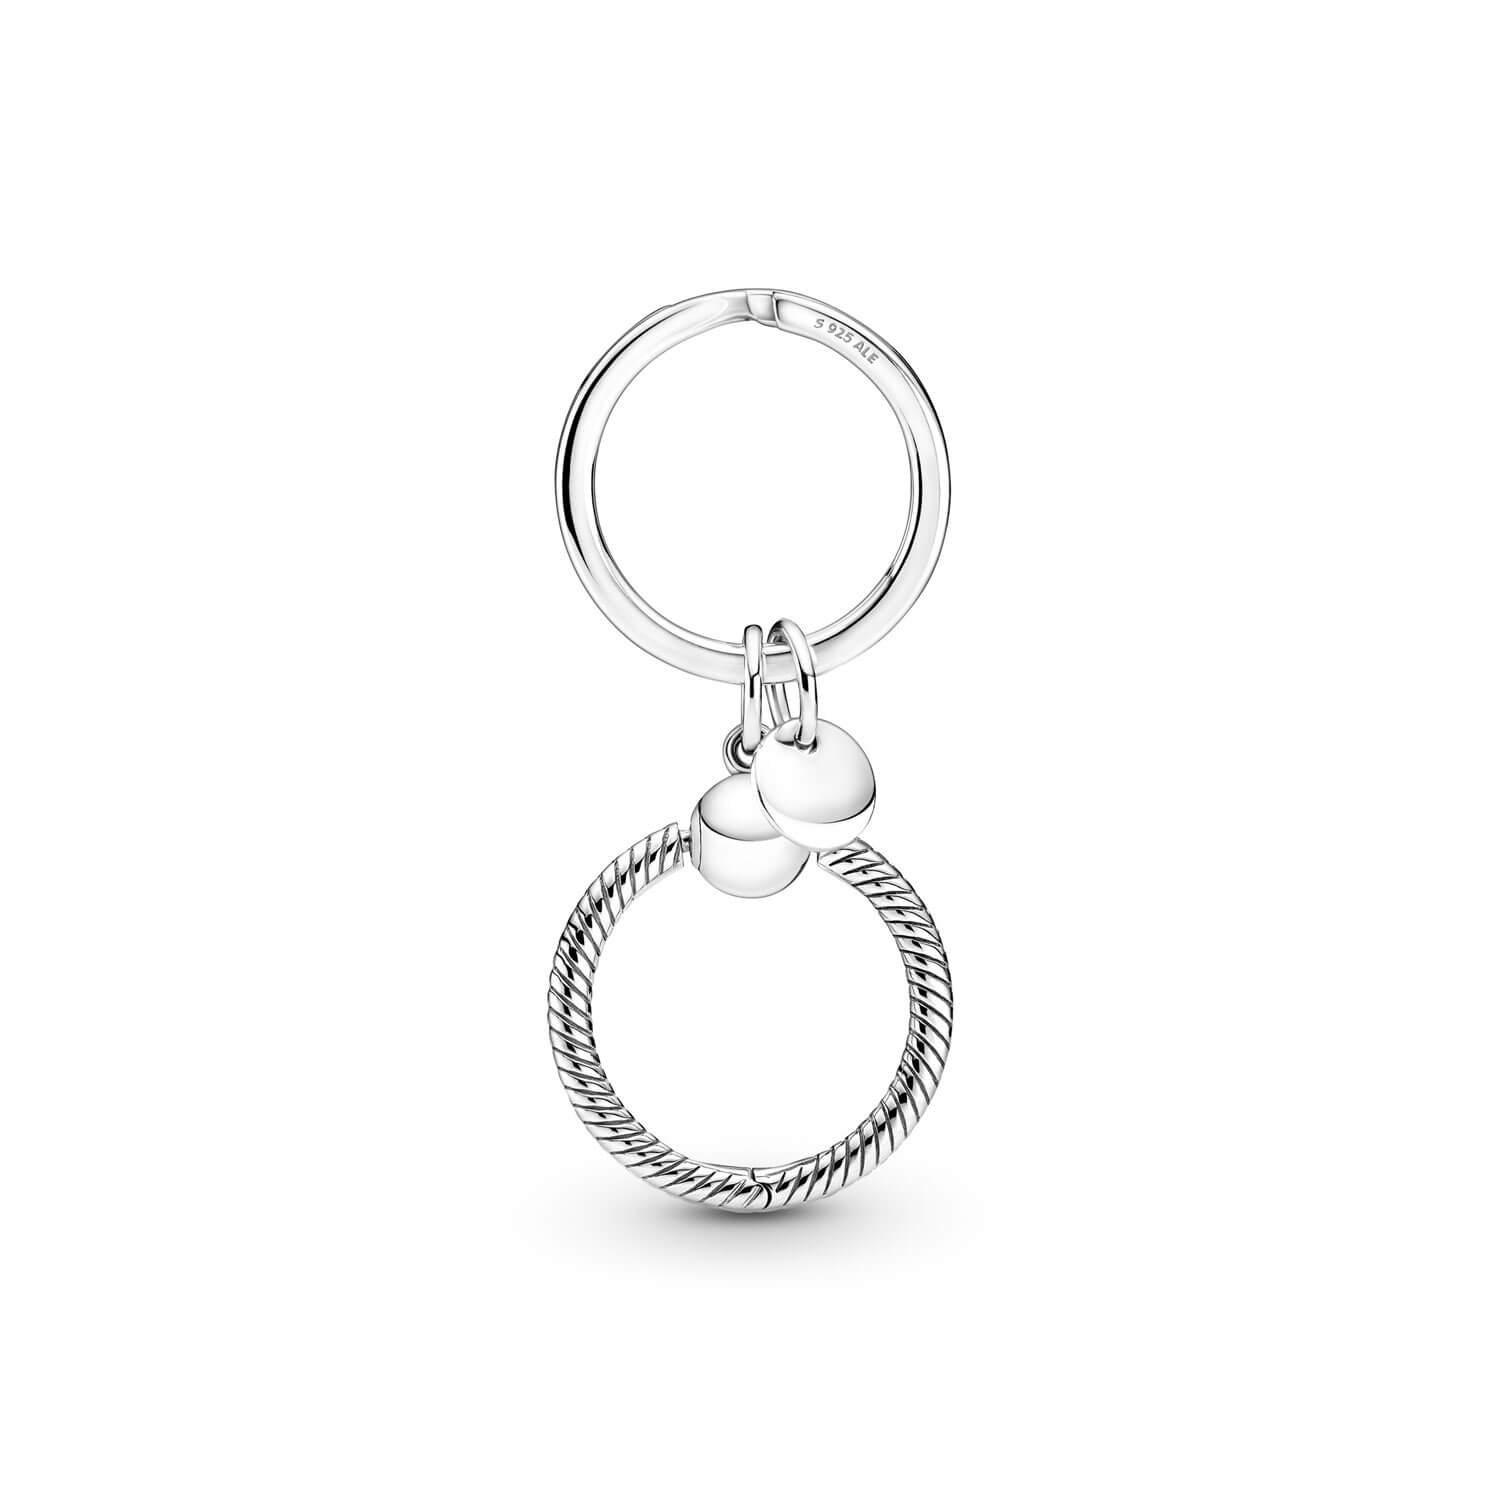 New Pandora Moments Charm Key Ring Holder 399566C00 US Seller